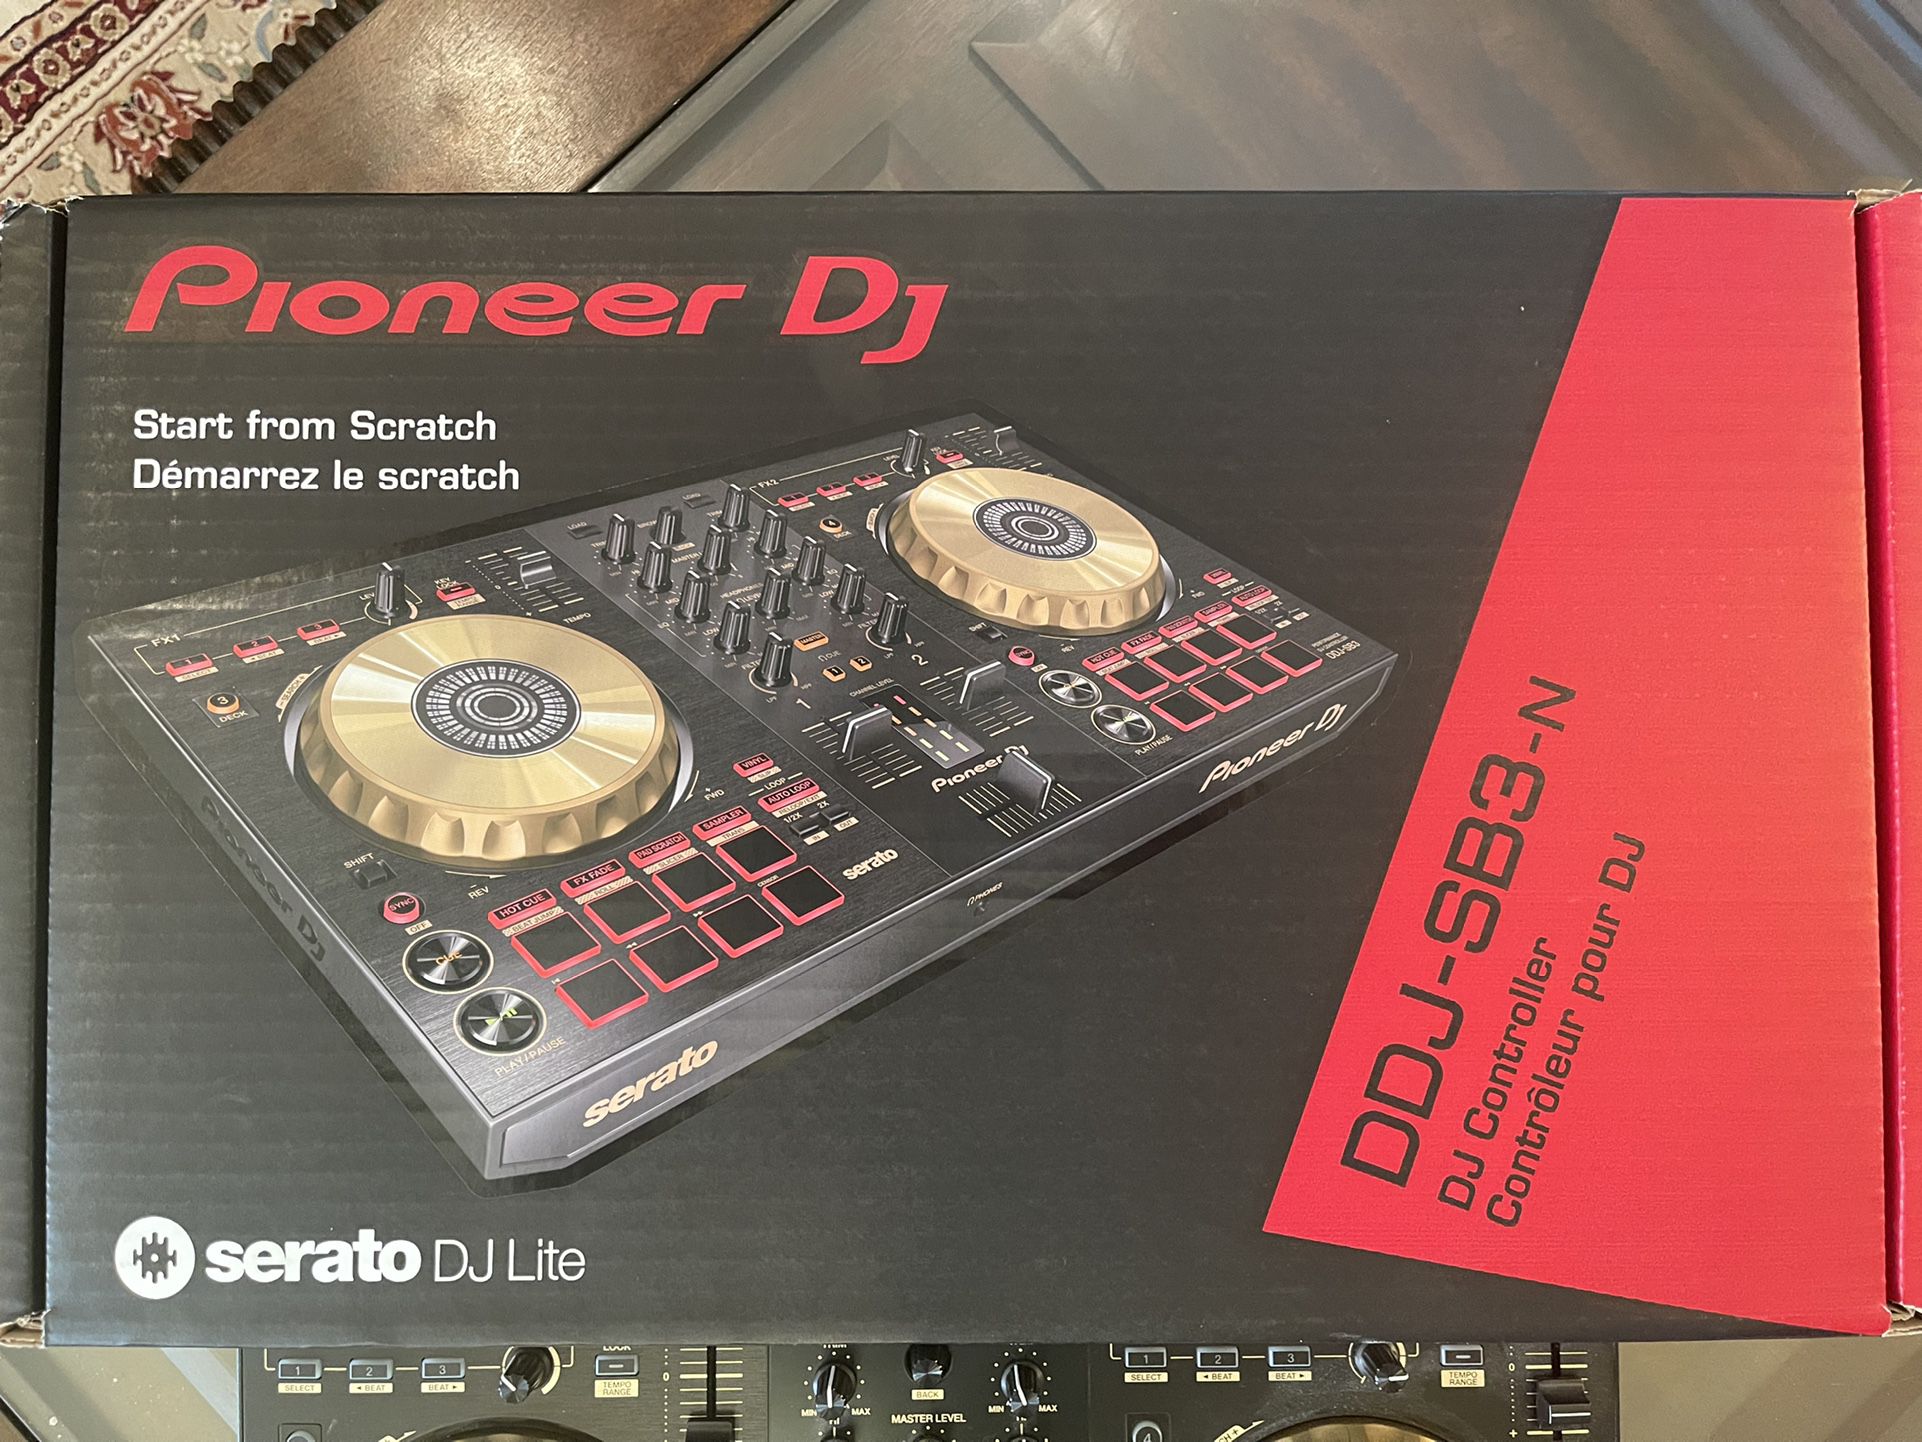 Pioneer DDJ-SB3 DJ Controller Gold 